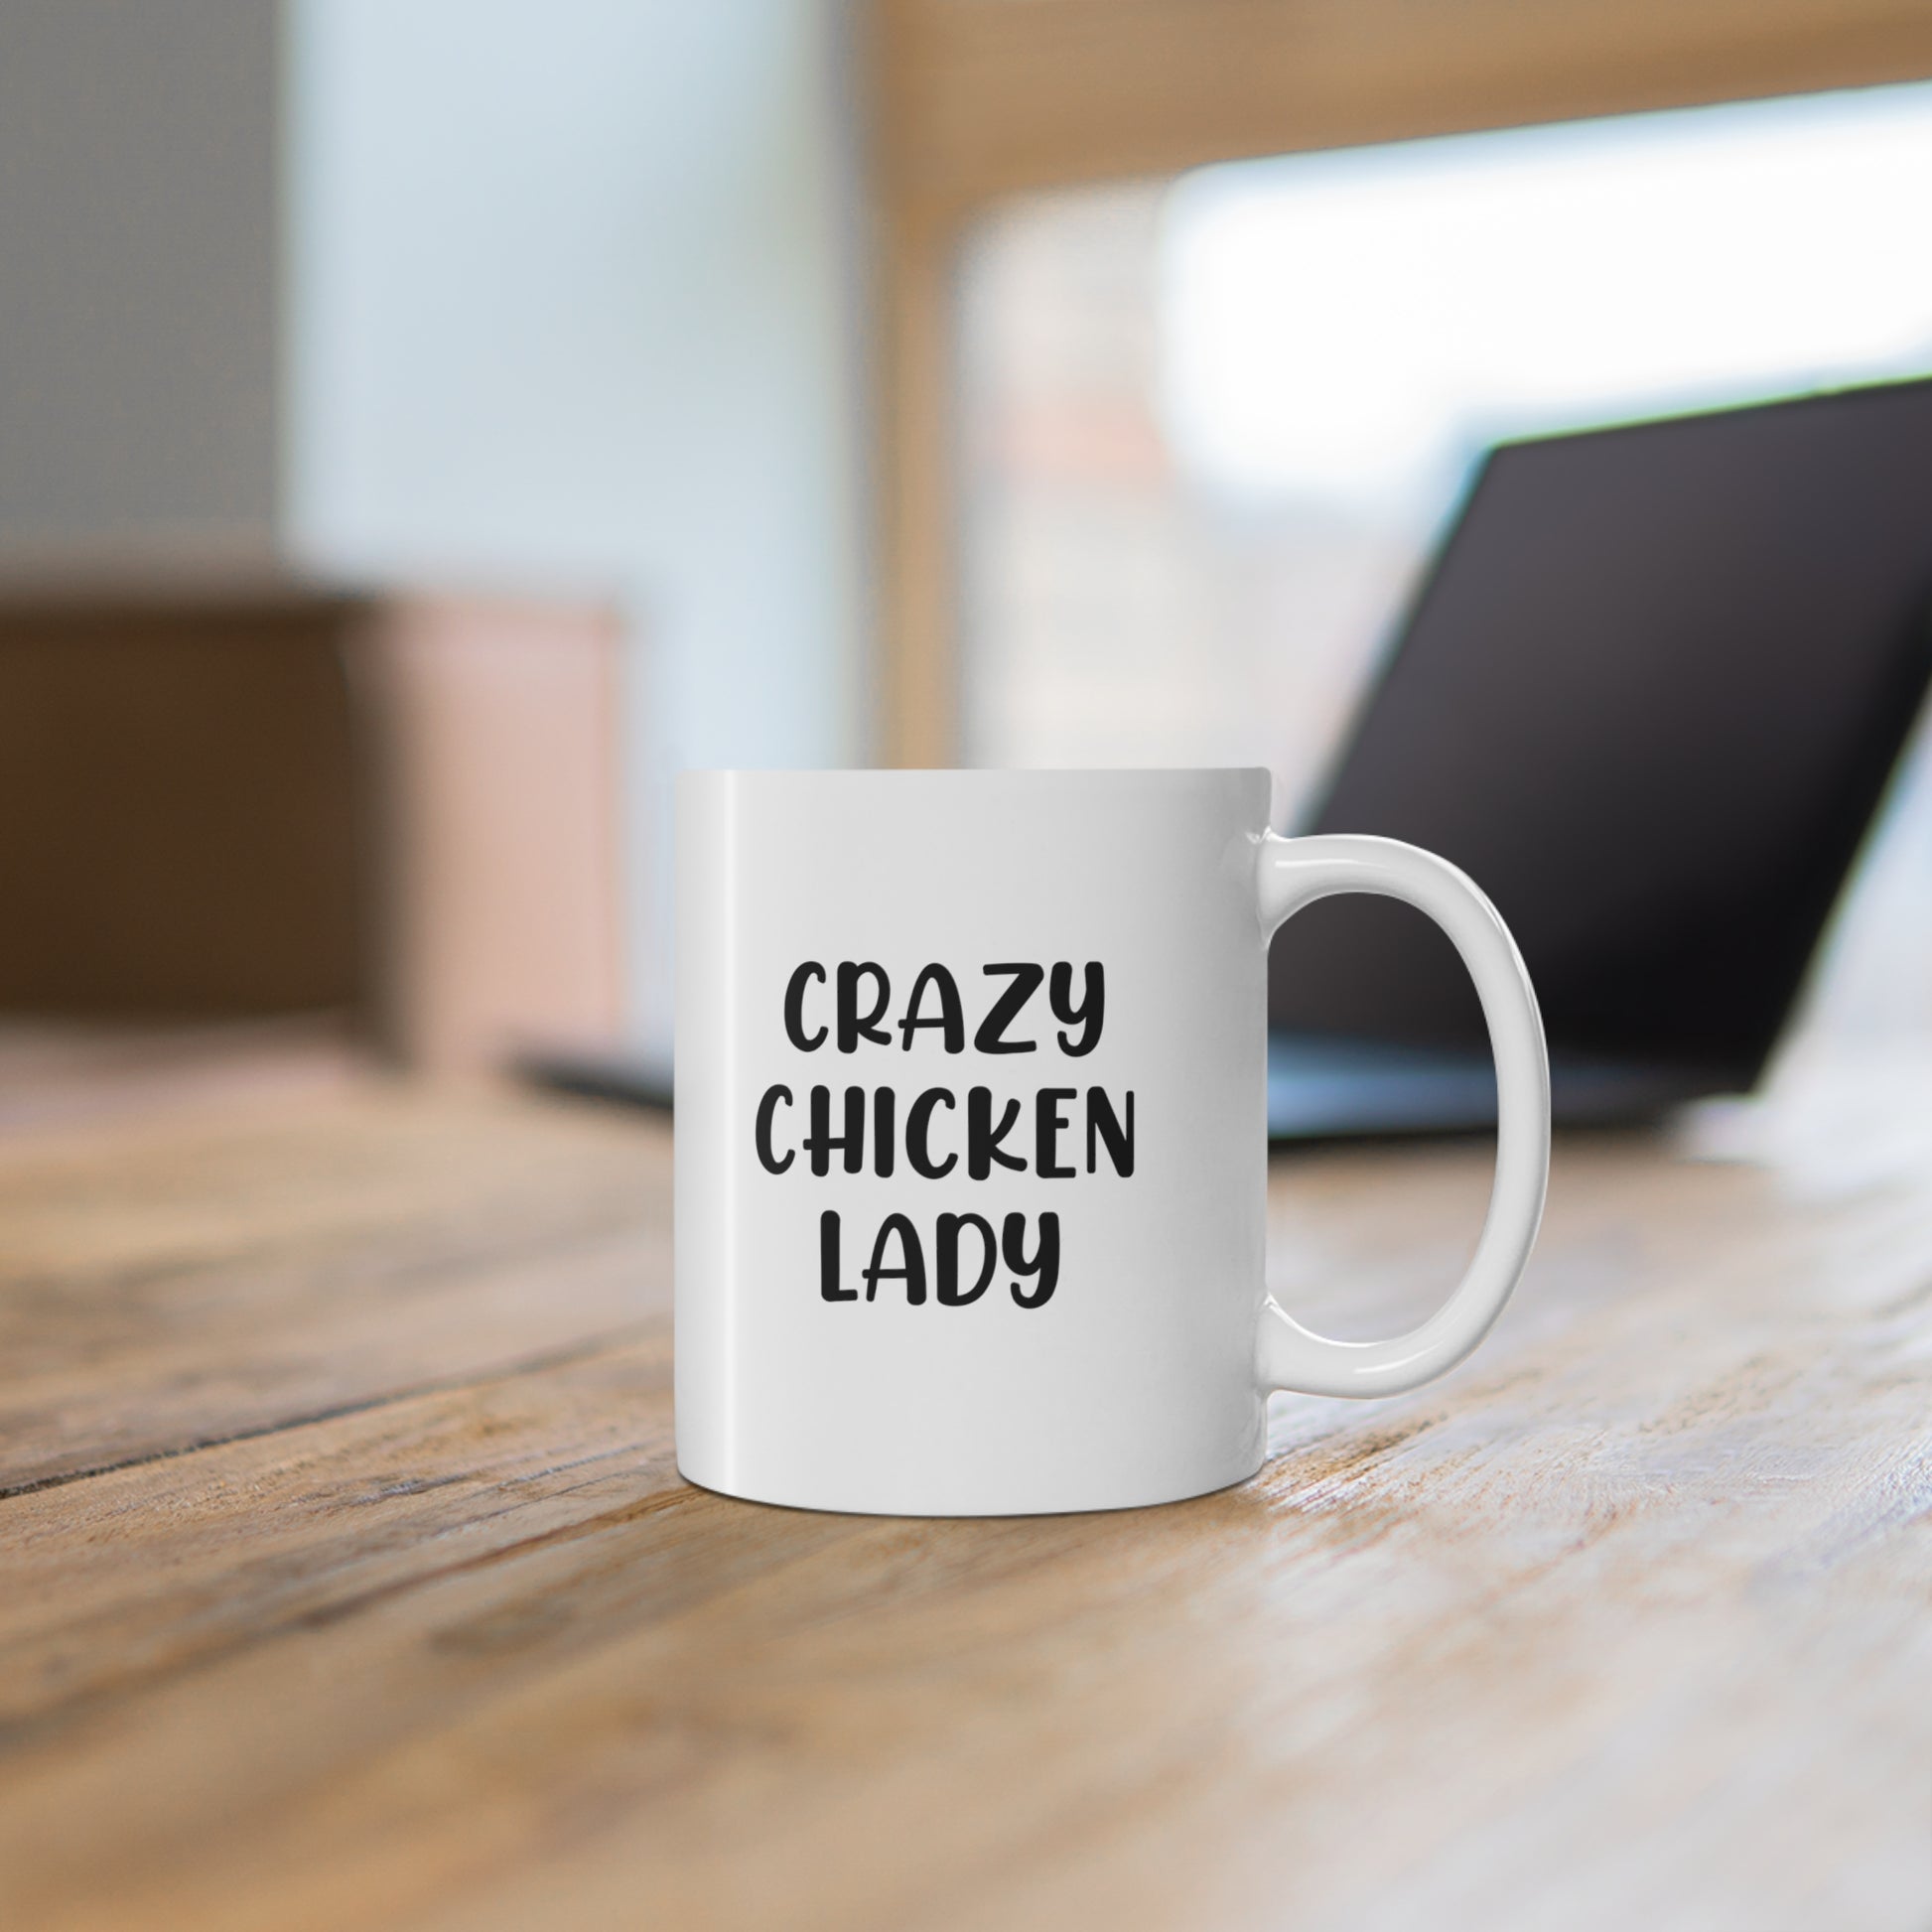 11oz ceramic mug with quote Crazy Chicken Lady